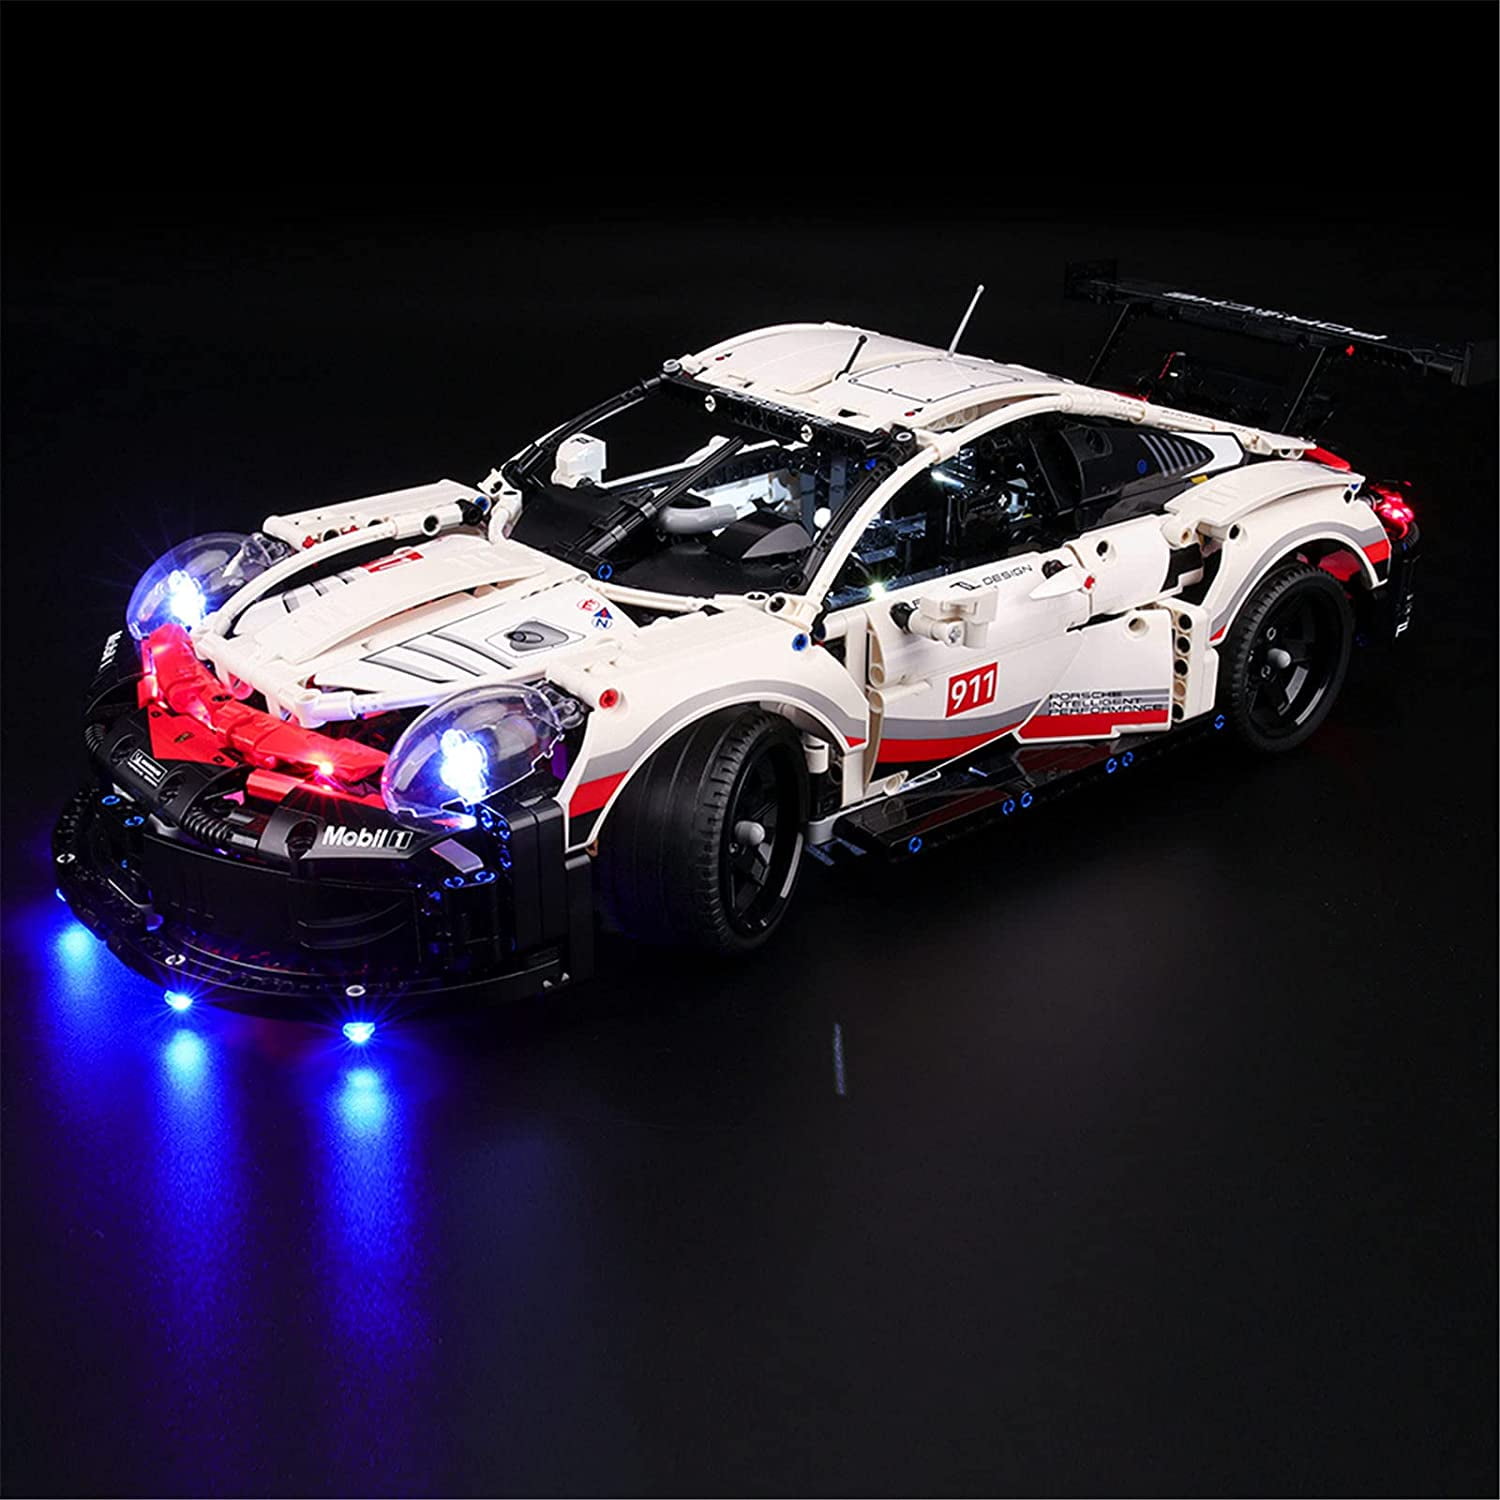 DEL Light Up Kit for LEGO 42096 Technic Series PORSCHE 911 RSR SUPER RACING CAR 